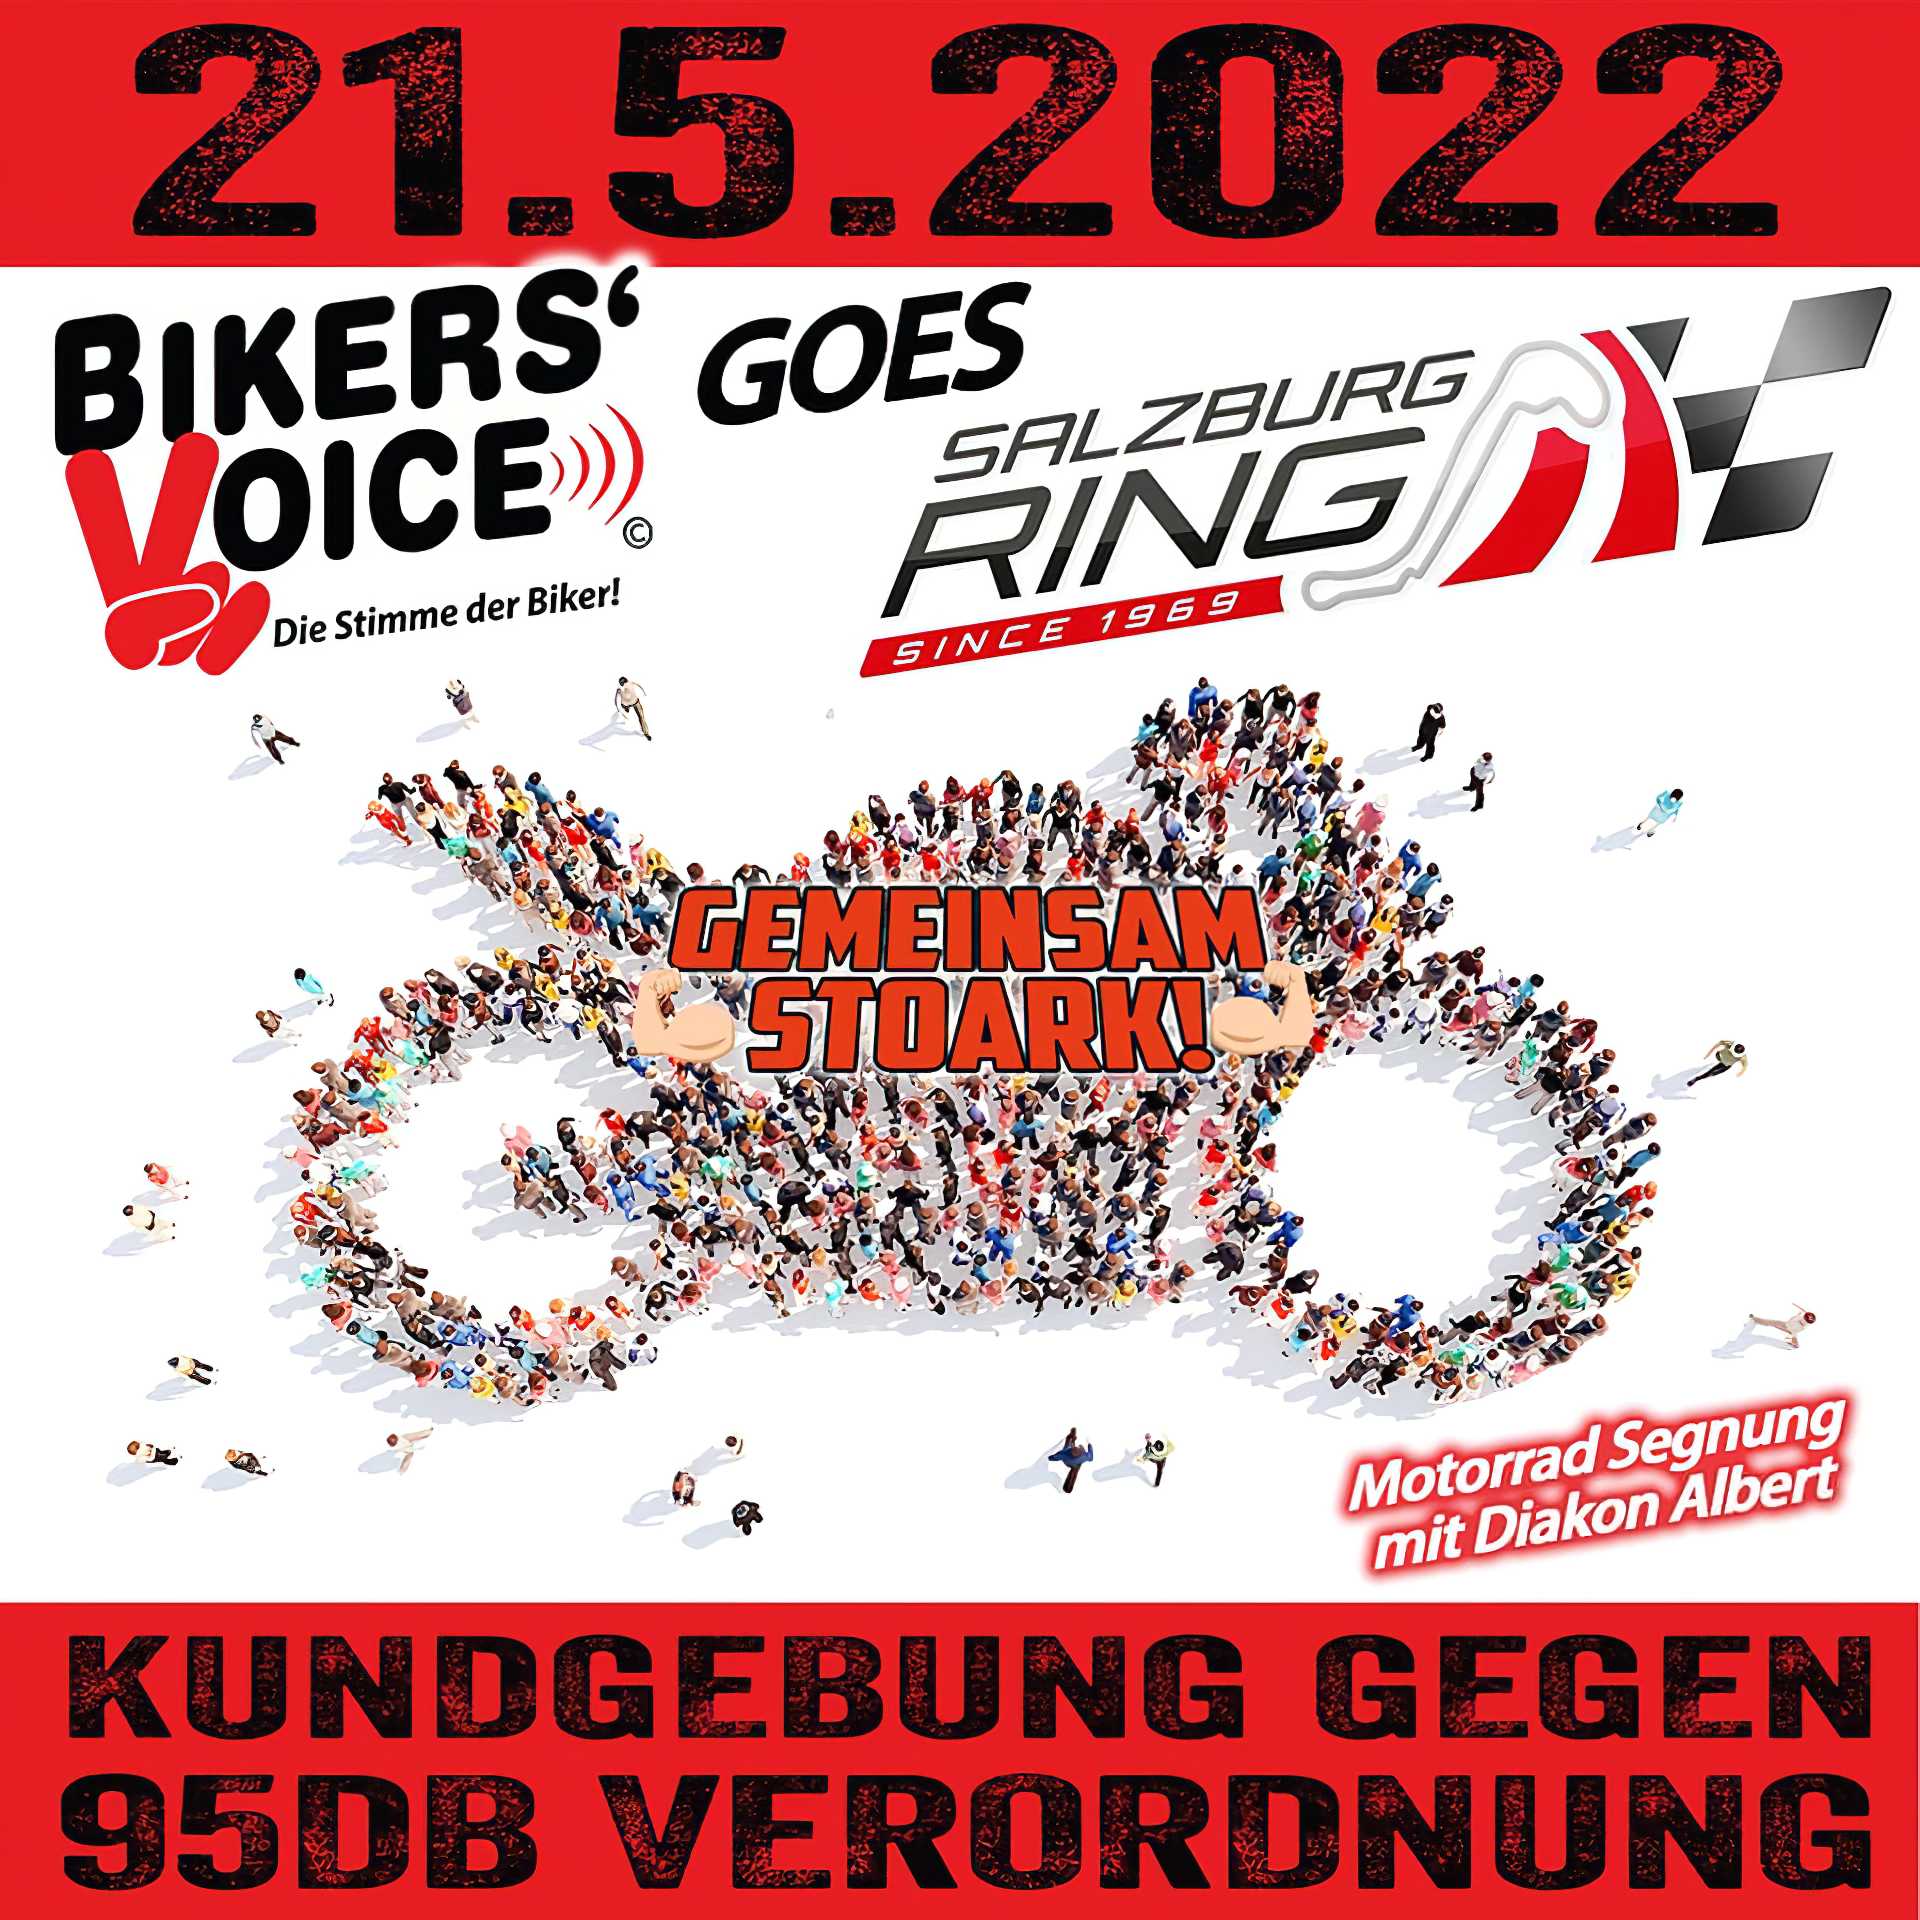 Bikers Voice goes Salzburgring